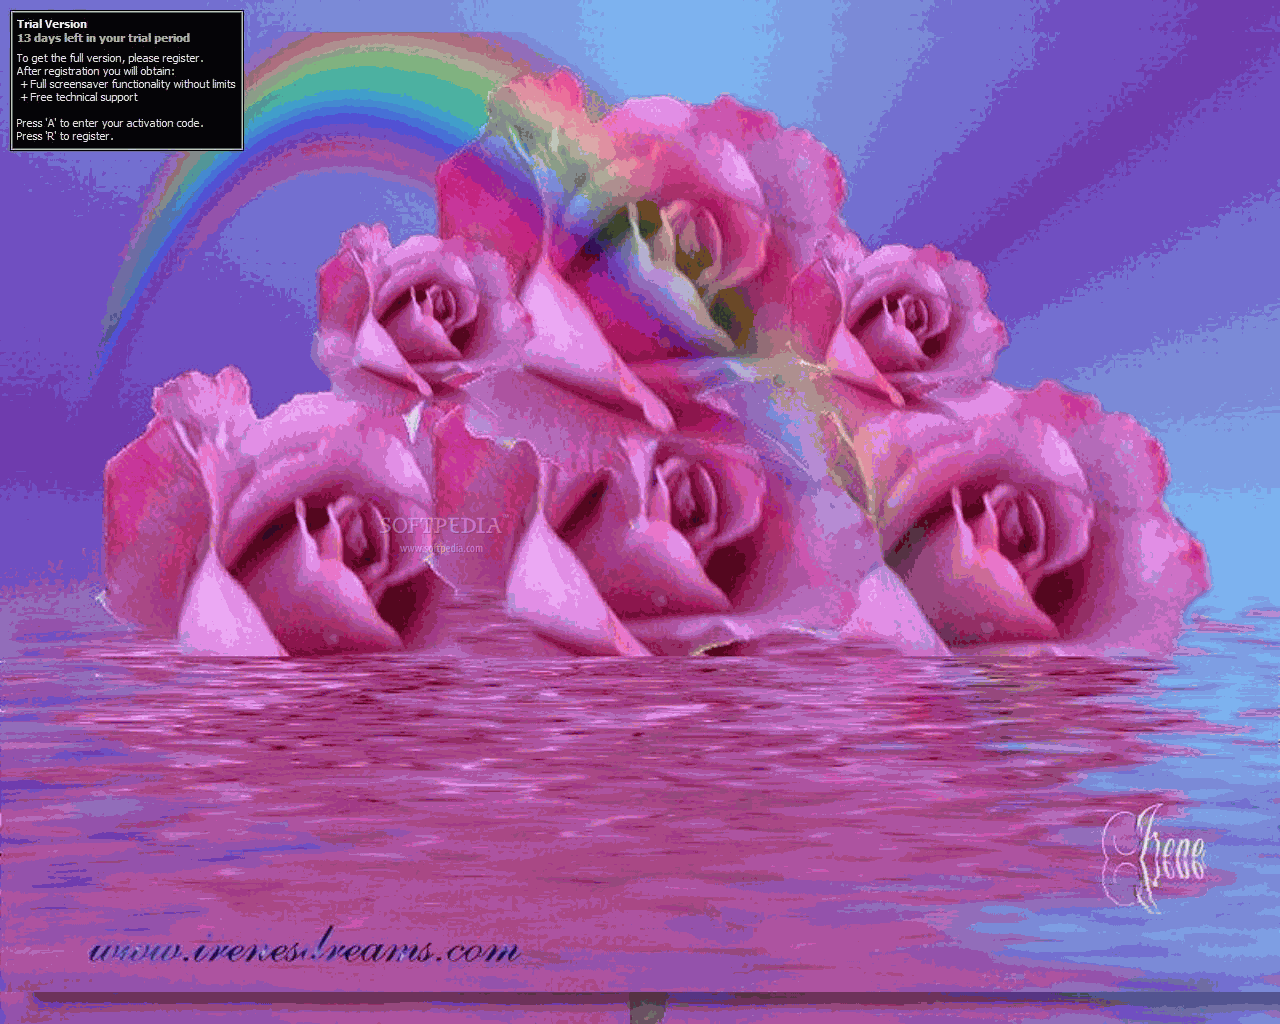 Roses Adrift Screensaver Will Display A Ravishing Slideshow